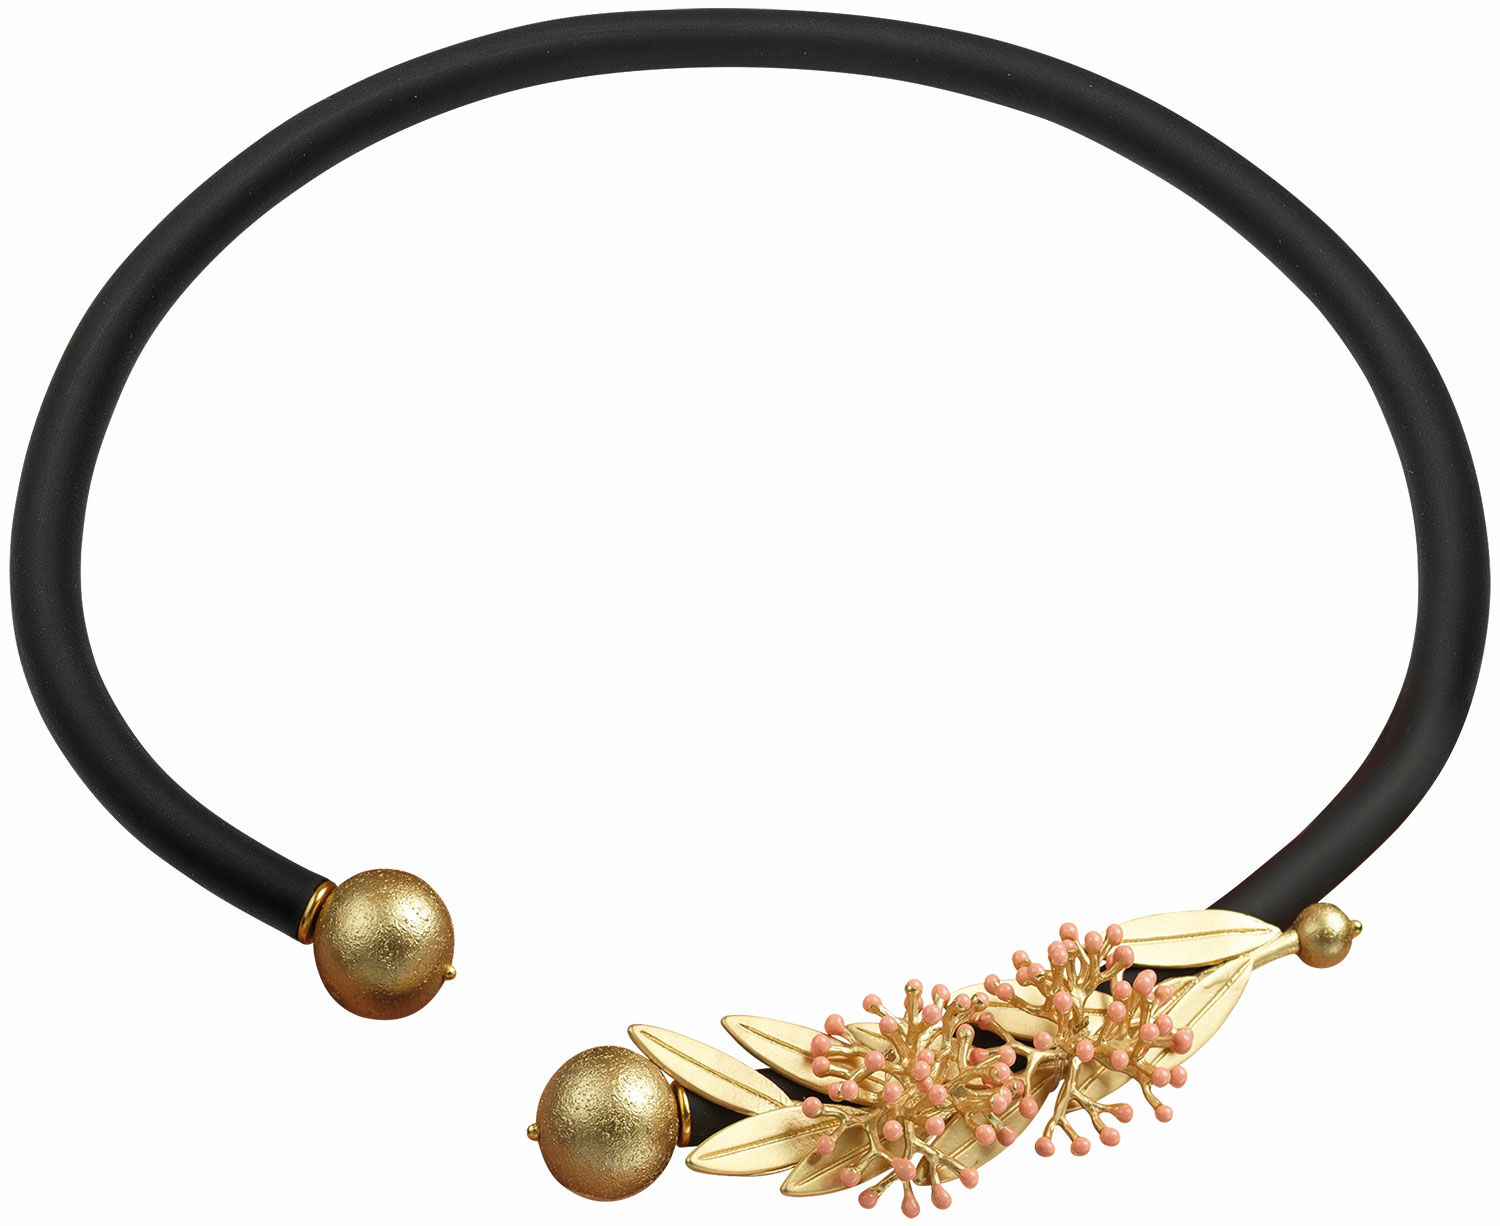 Necklace "Oleander" by Anna Mütz